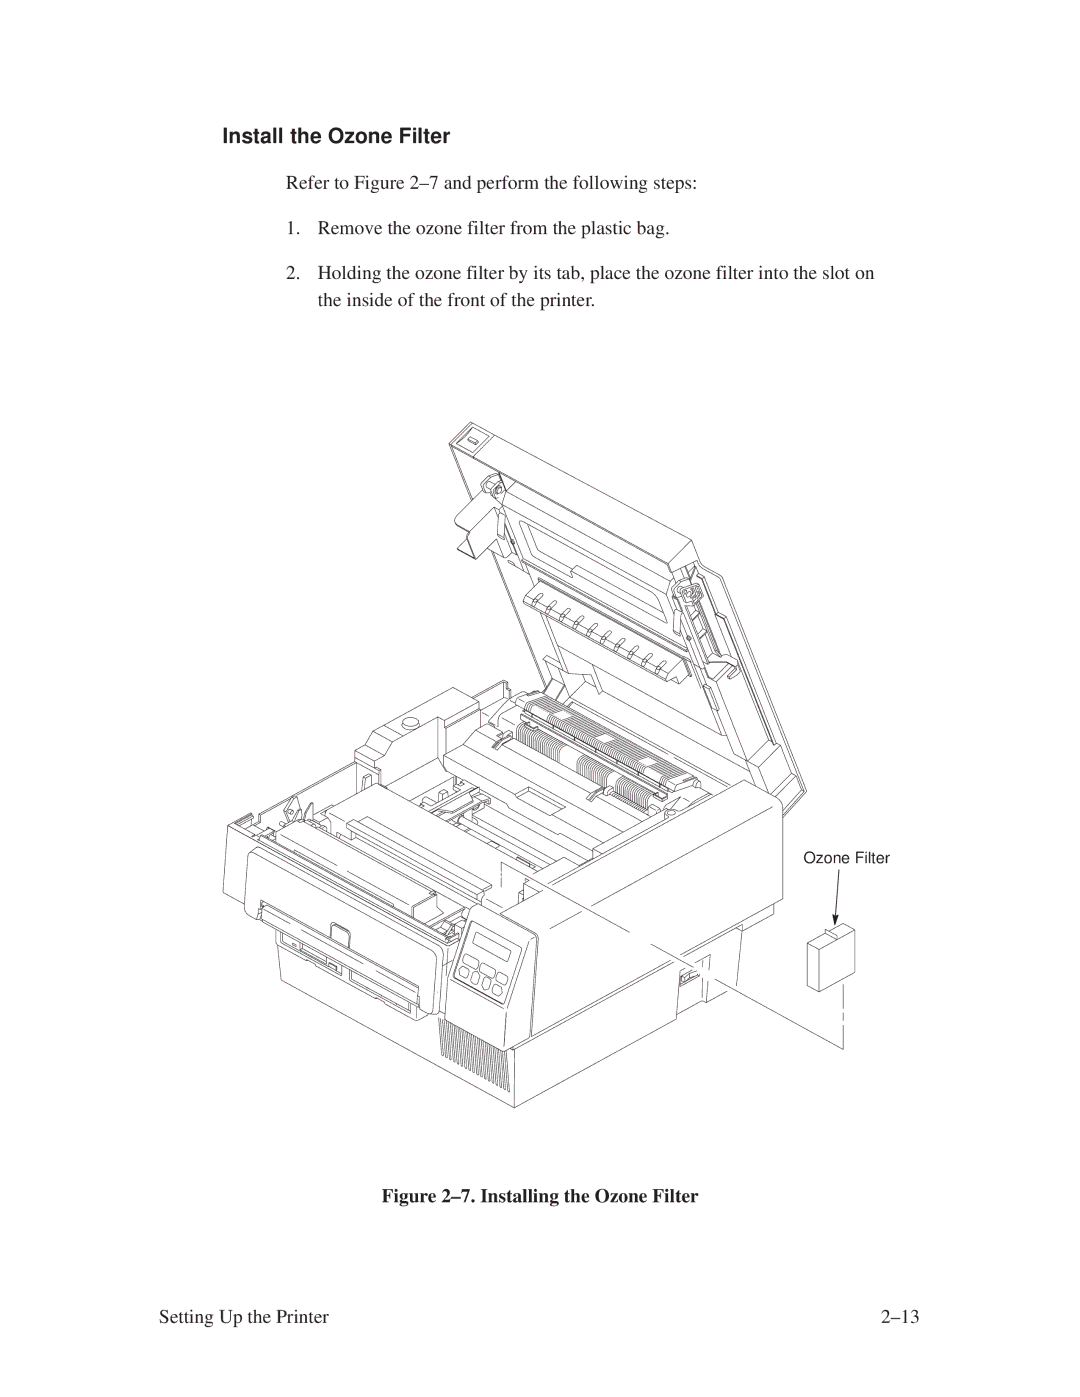 Printronix L1024 manual Install the Ozone Filter, ±7. Installing the Ozone Filter 